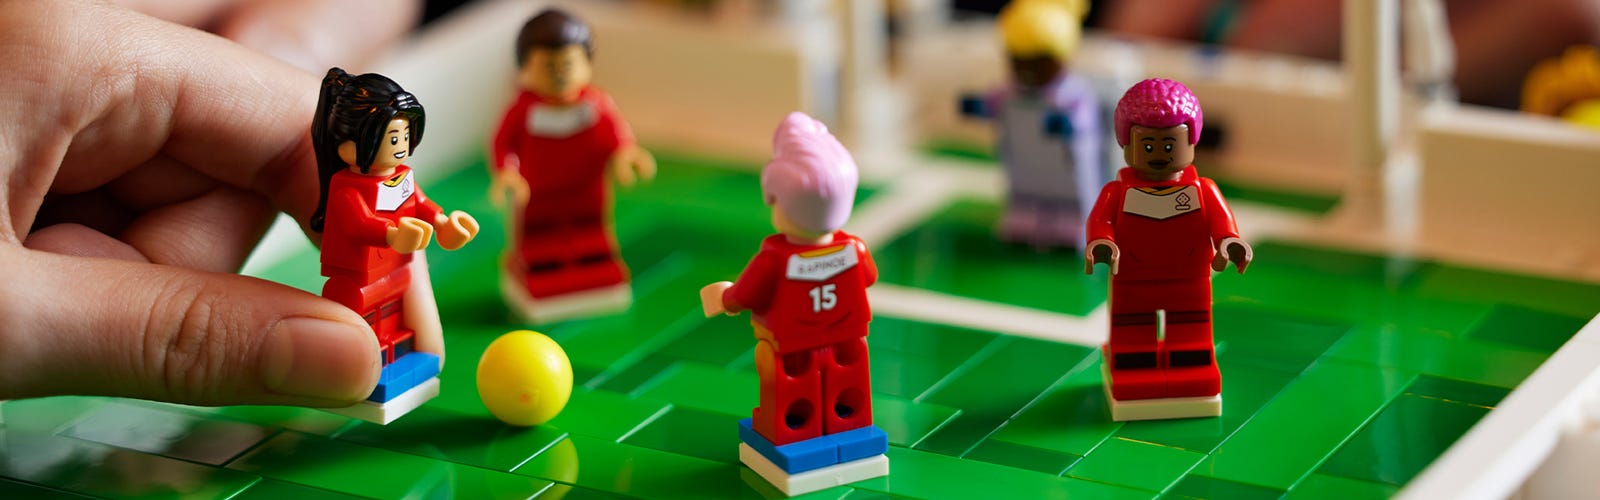 LEGO IDEAS - We love sports! - NFL Football Game